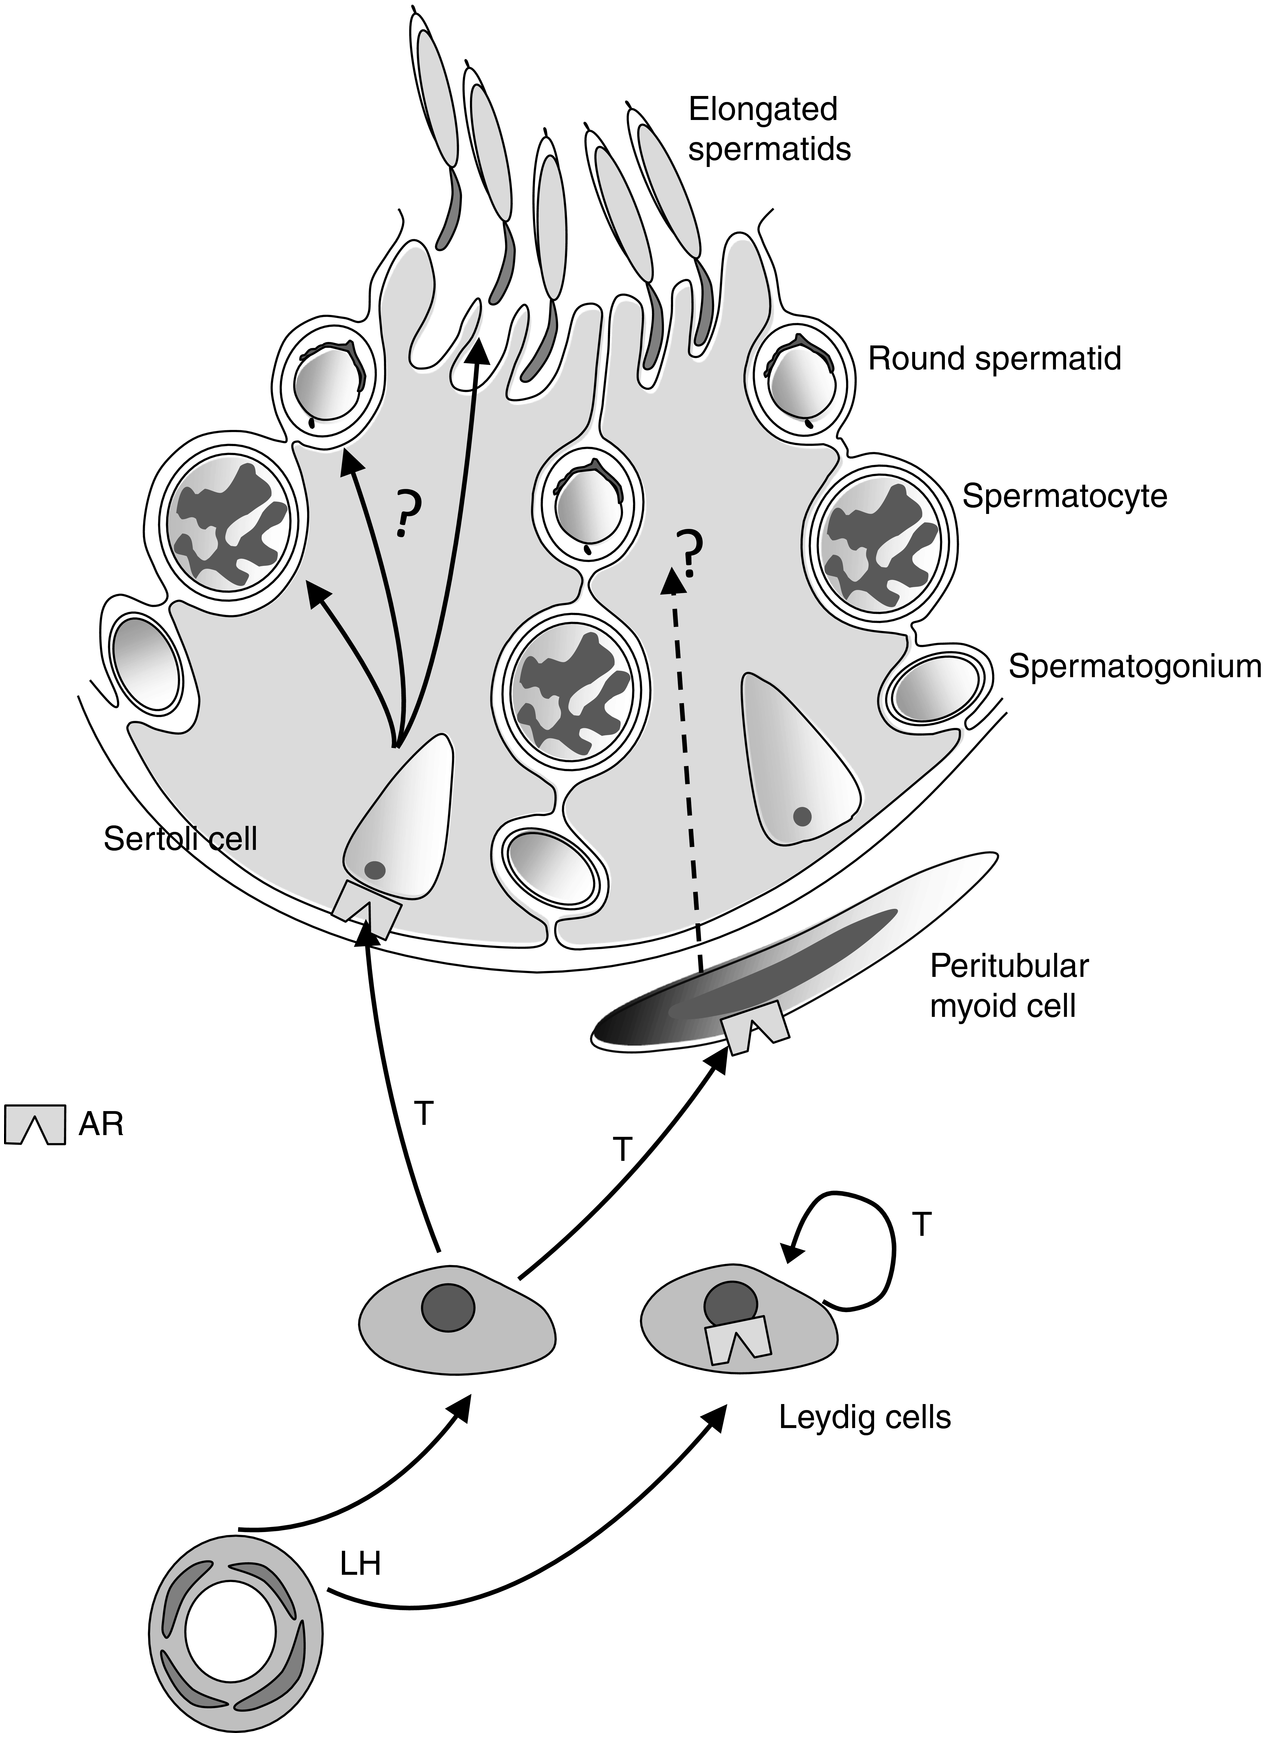 The role of testosterone in spermatogenesis (Chapter 6) - Testosterone